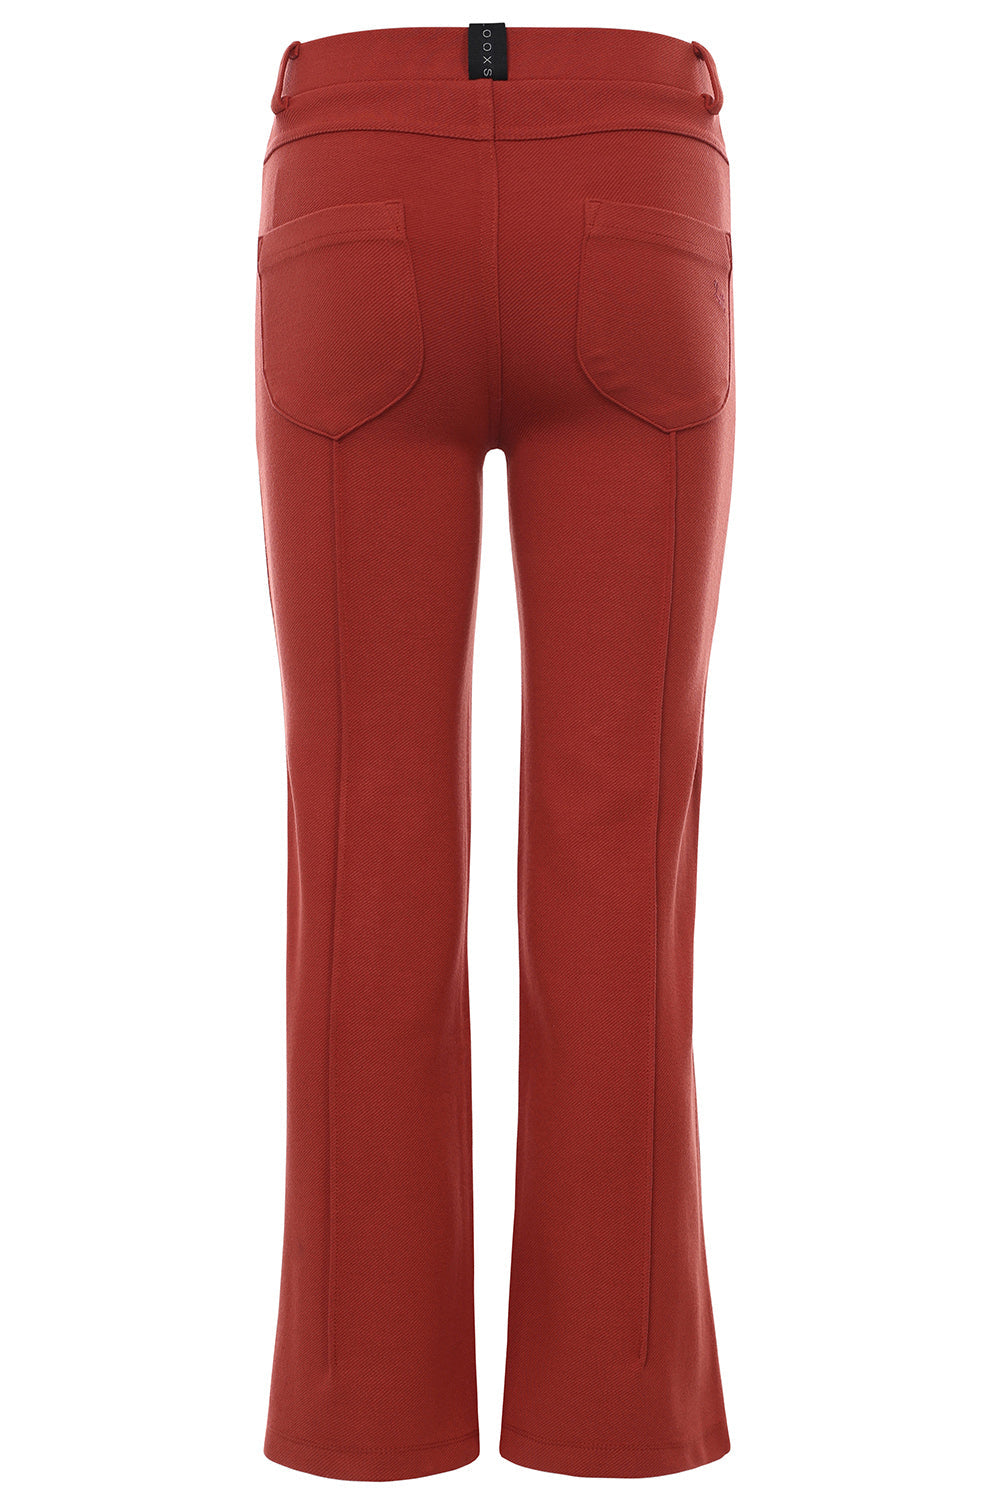 Meisjes Wide Pantalon Pants van Looxs 10sixteen in de kleur Cinnamon in maat 176.